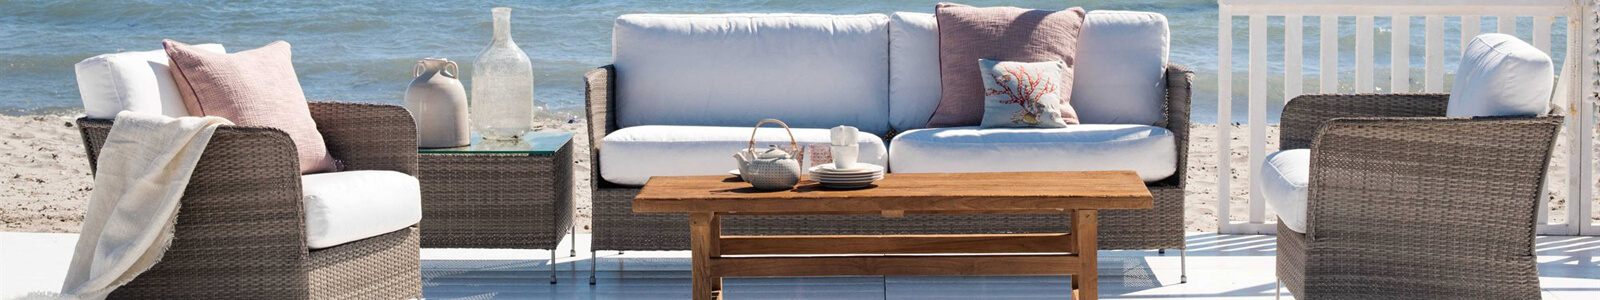 Sika Design Outdoor Furniture Banner